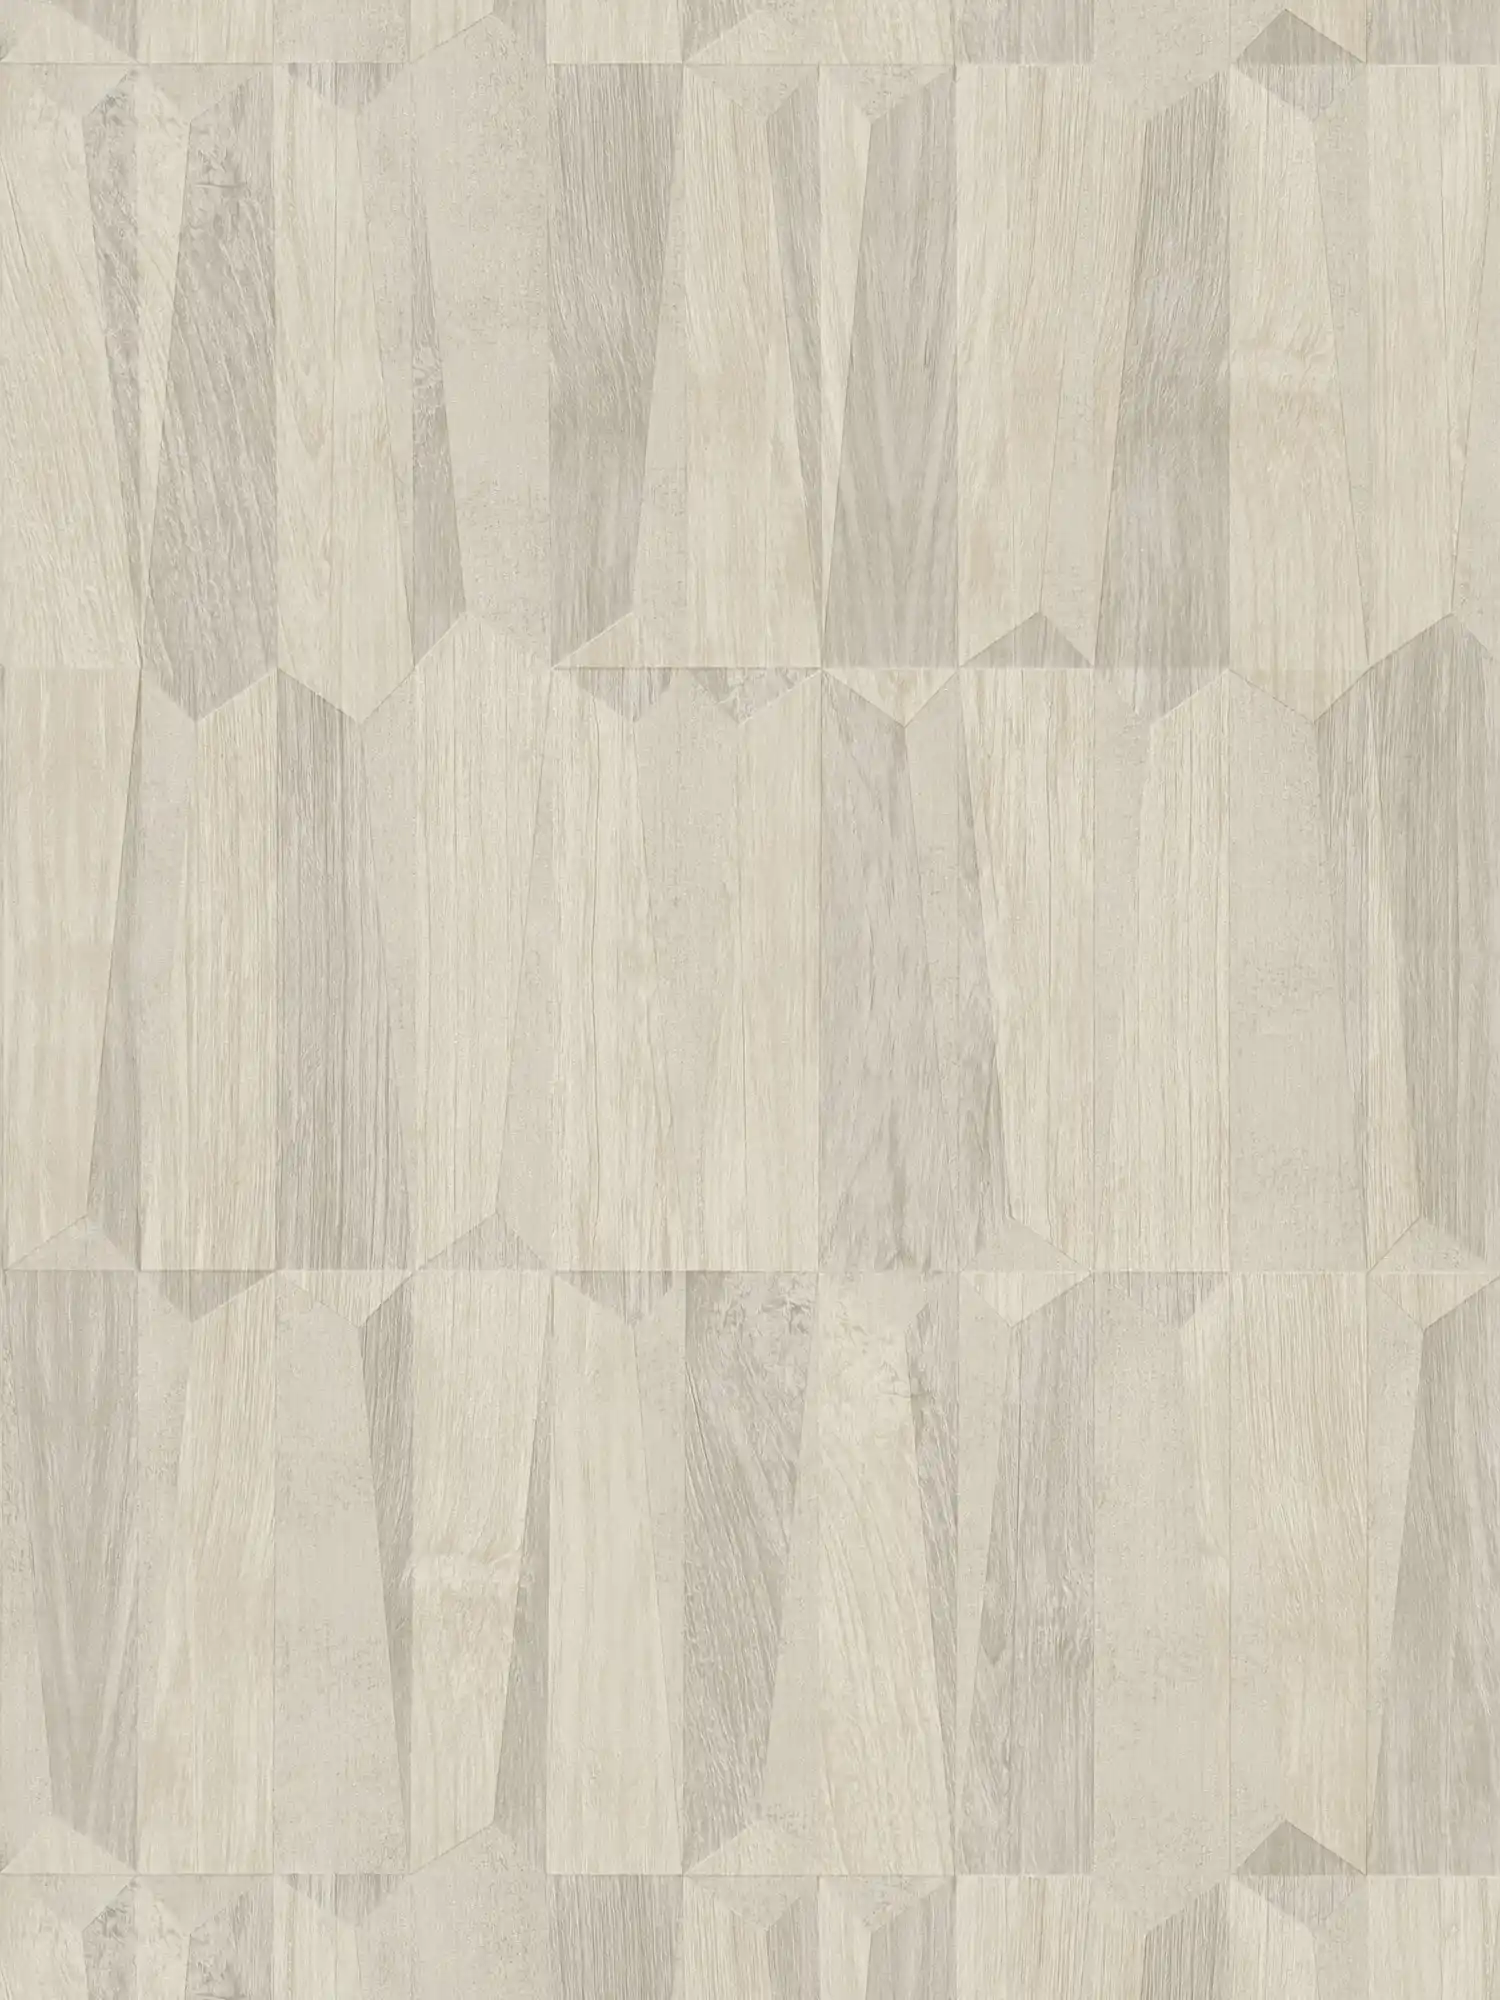 Wallpaper wood look facets in retro look - cream, grey
